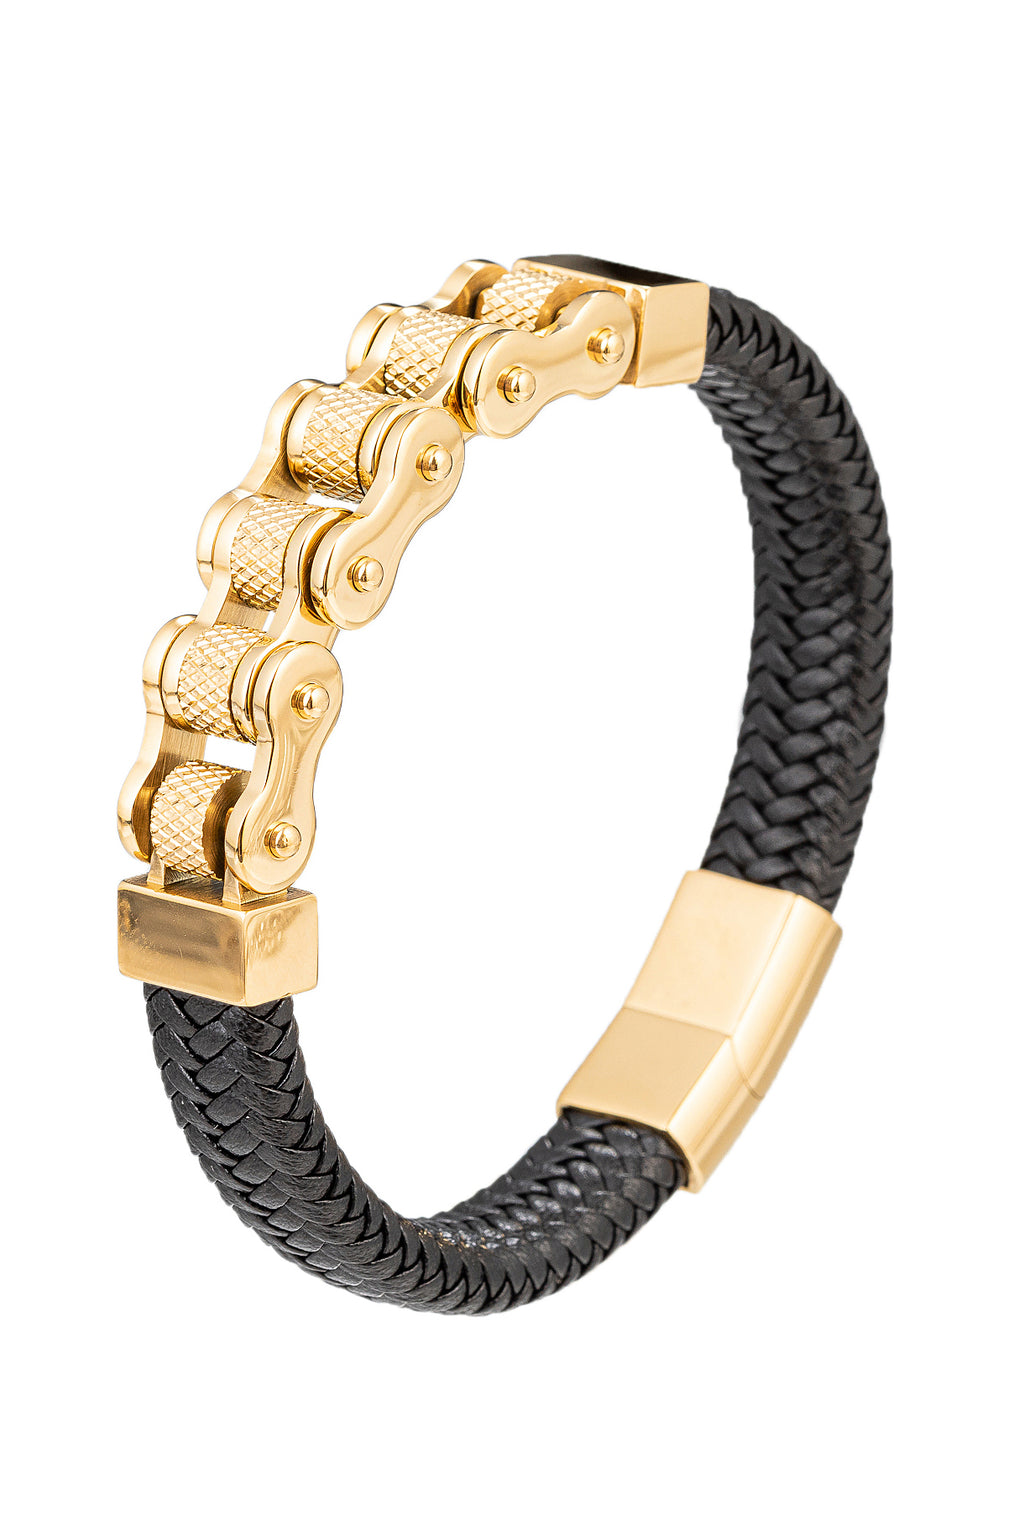 Gold tone titanium bike chain on a authentic black leather bracelet.